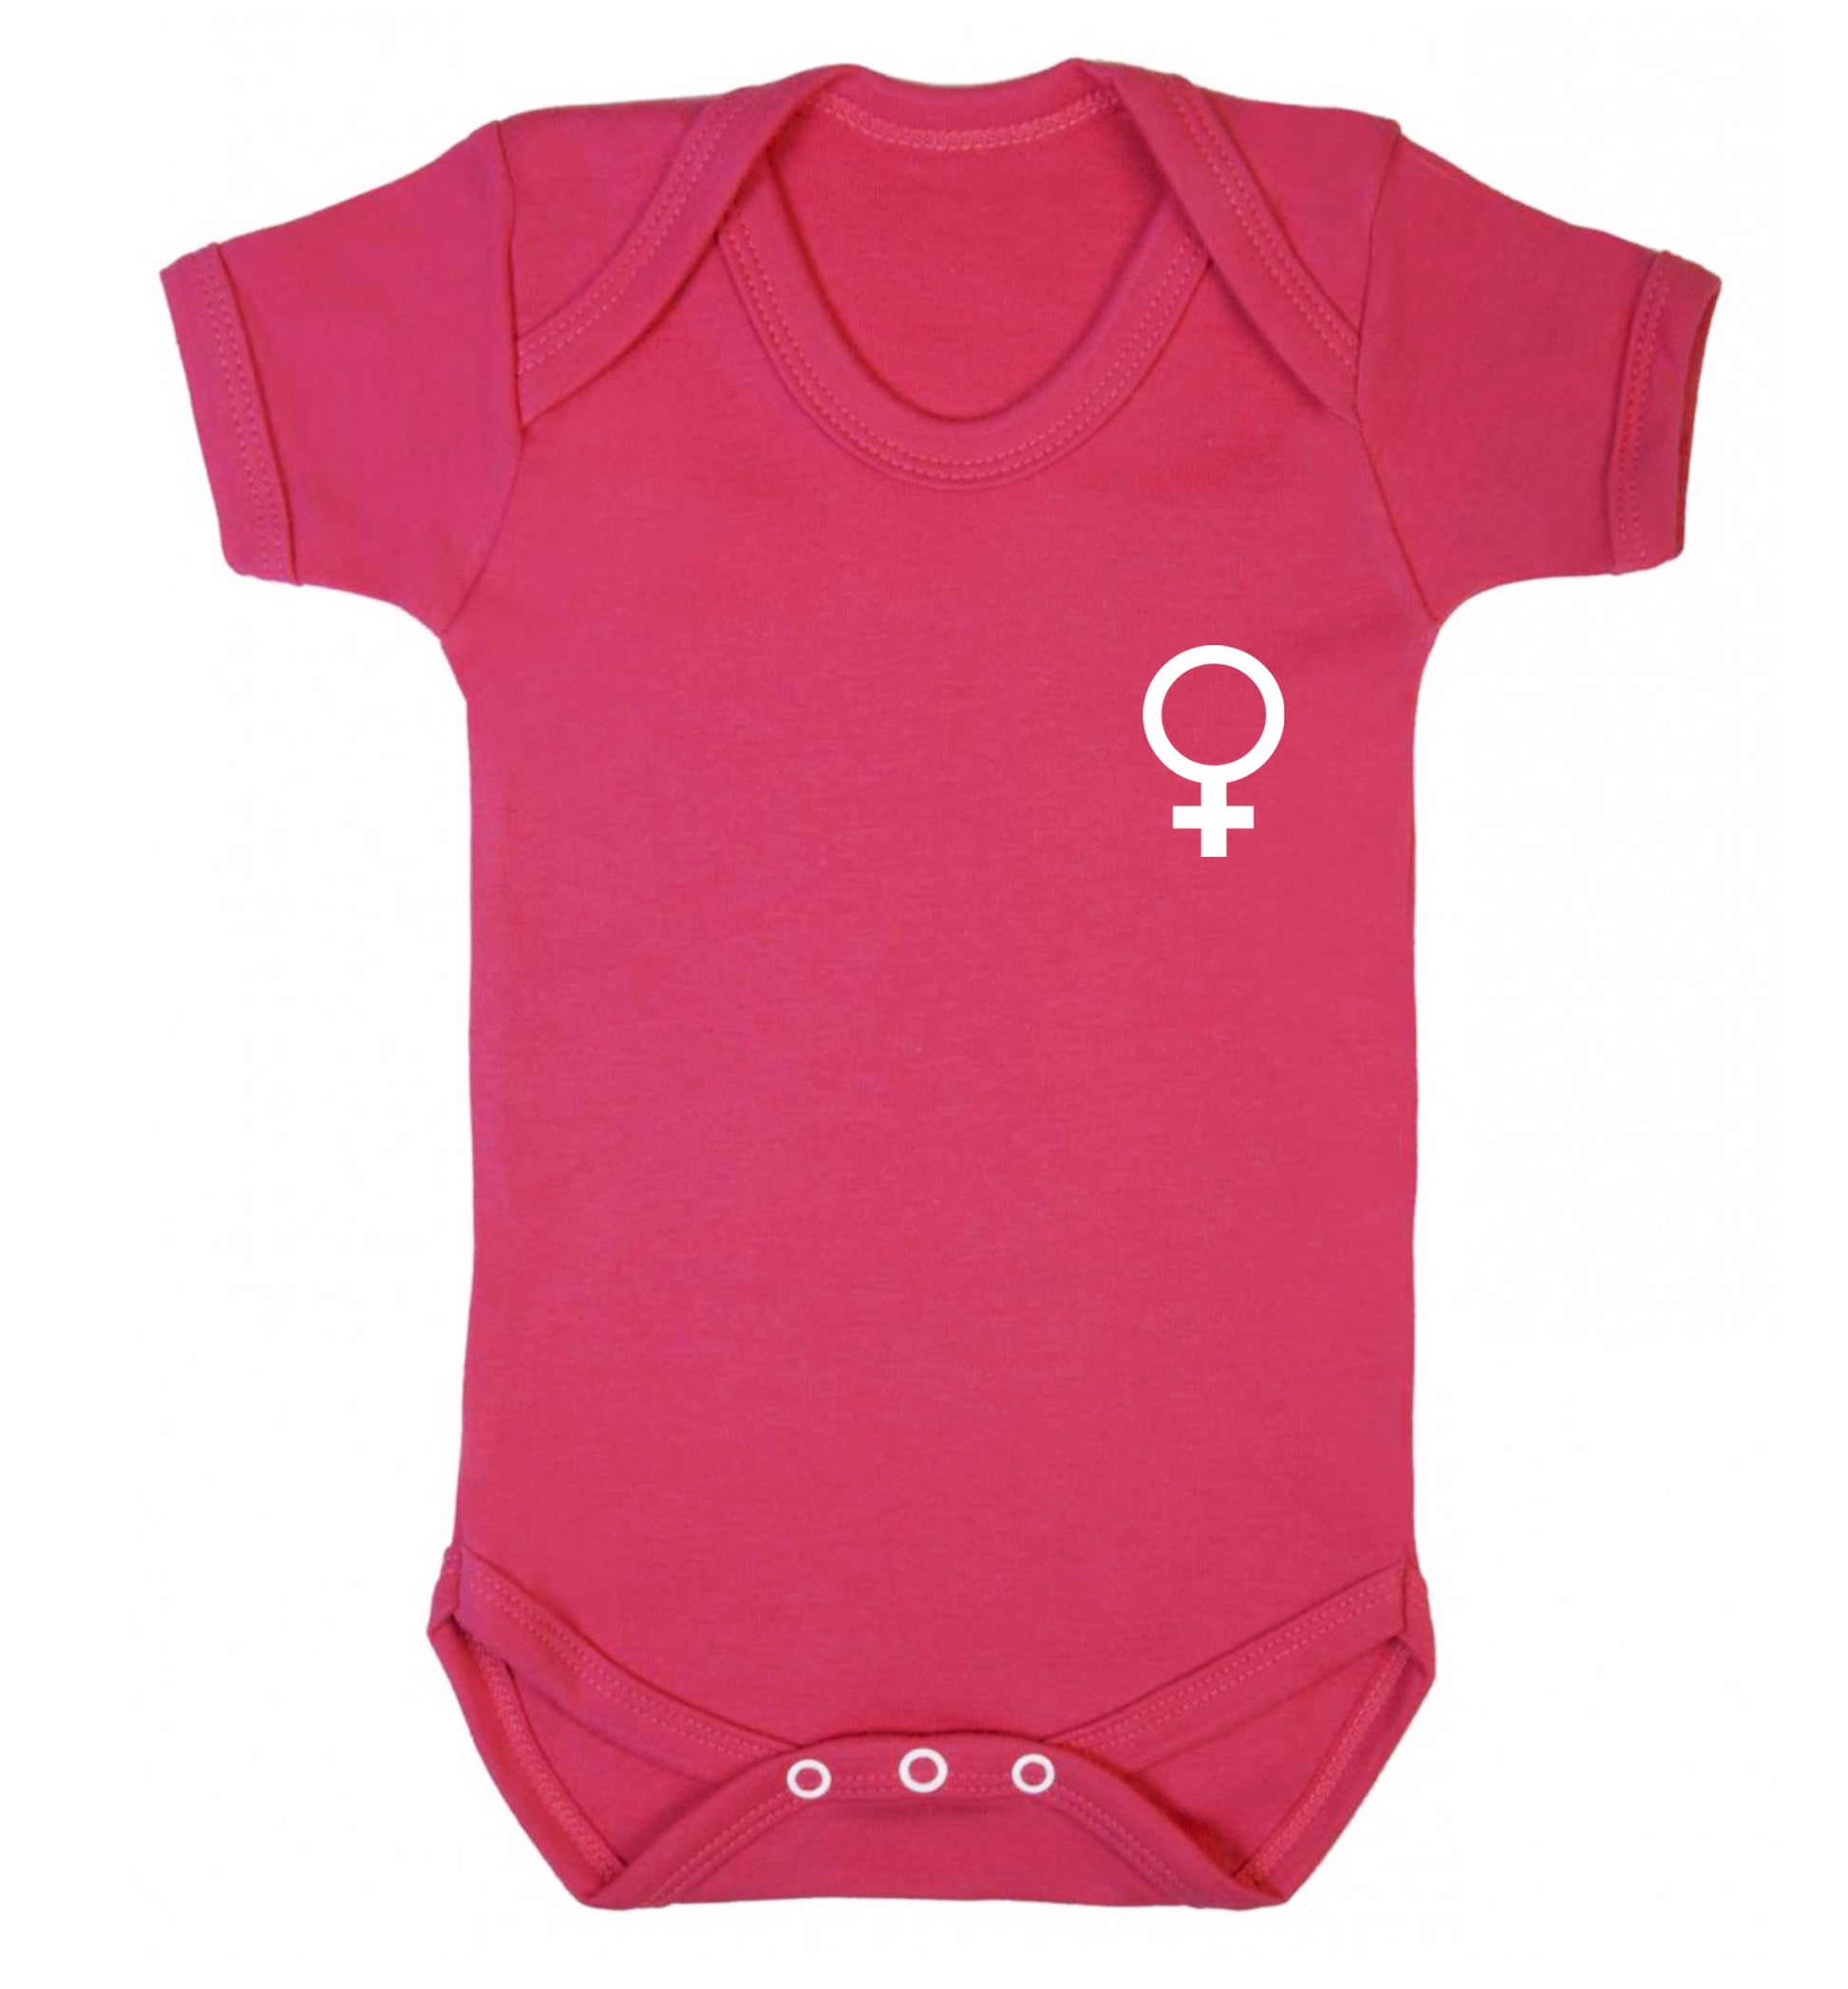 Female pocket symbol Baby Vest dark pink 18-24 months